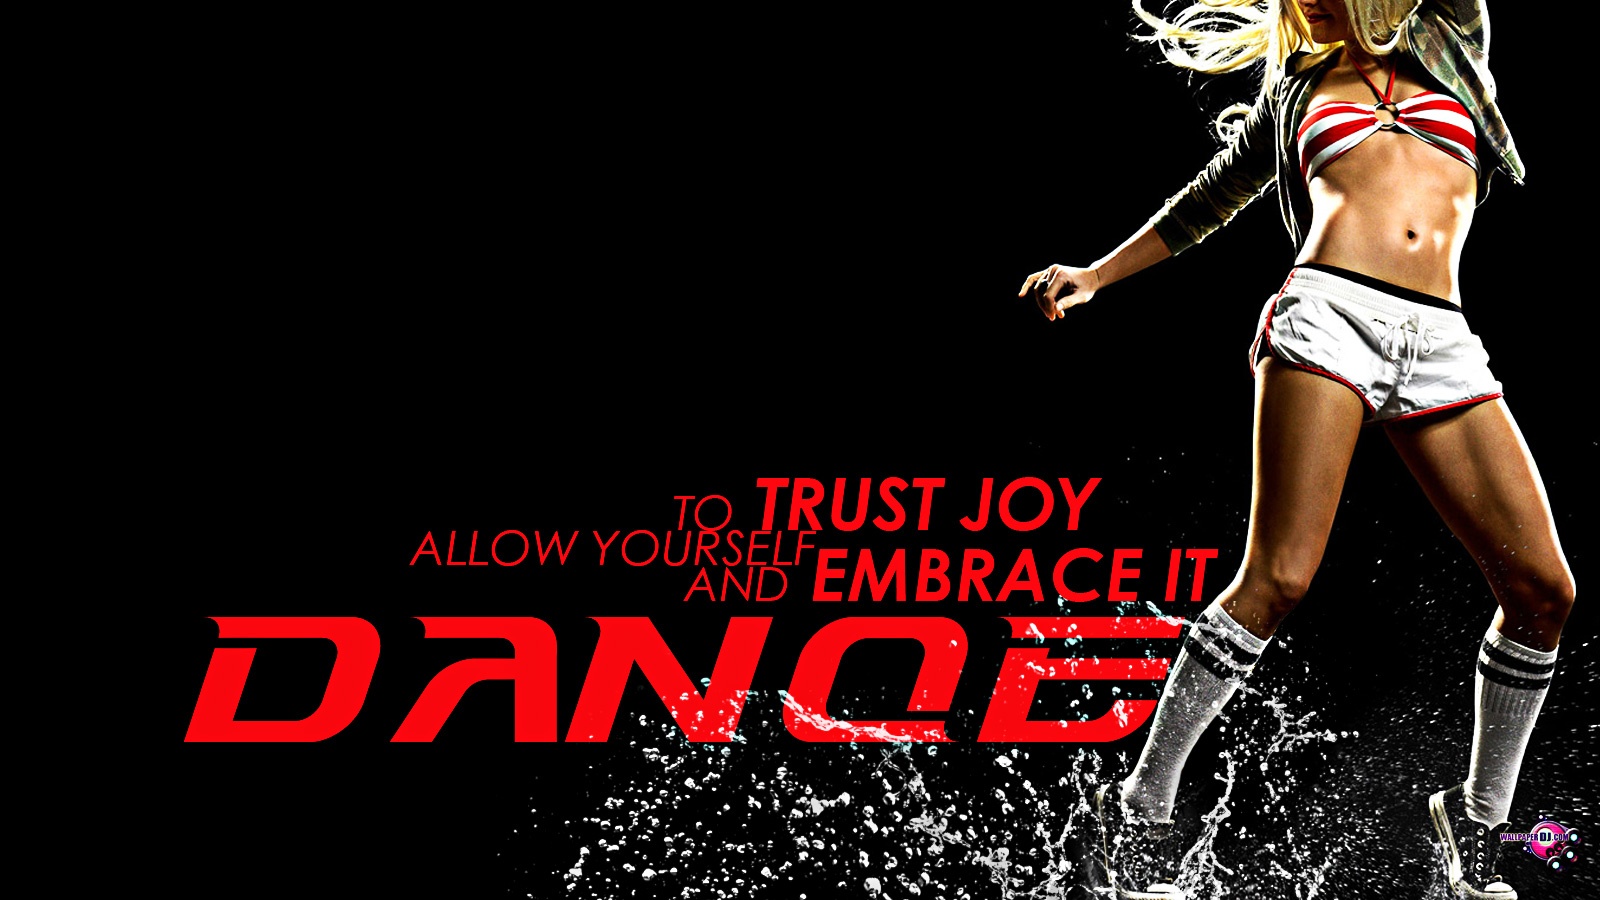 Trust Joy & Embrace It HD and Wide Wallpapers